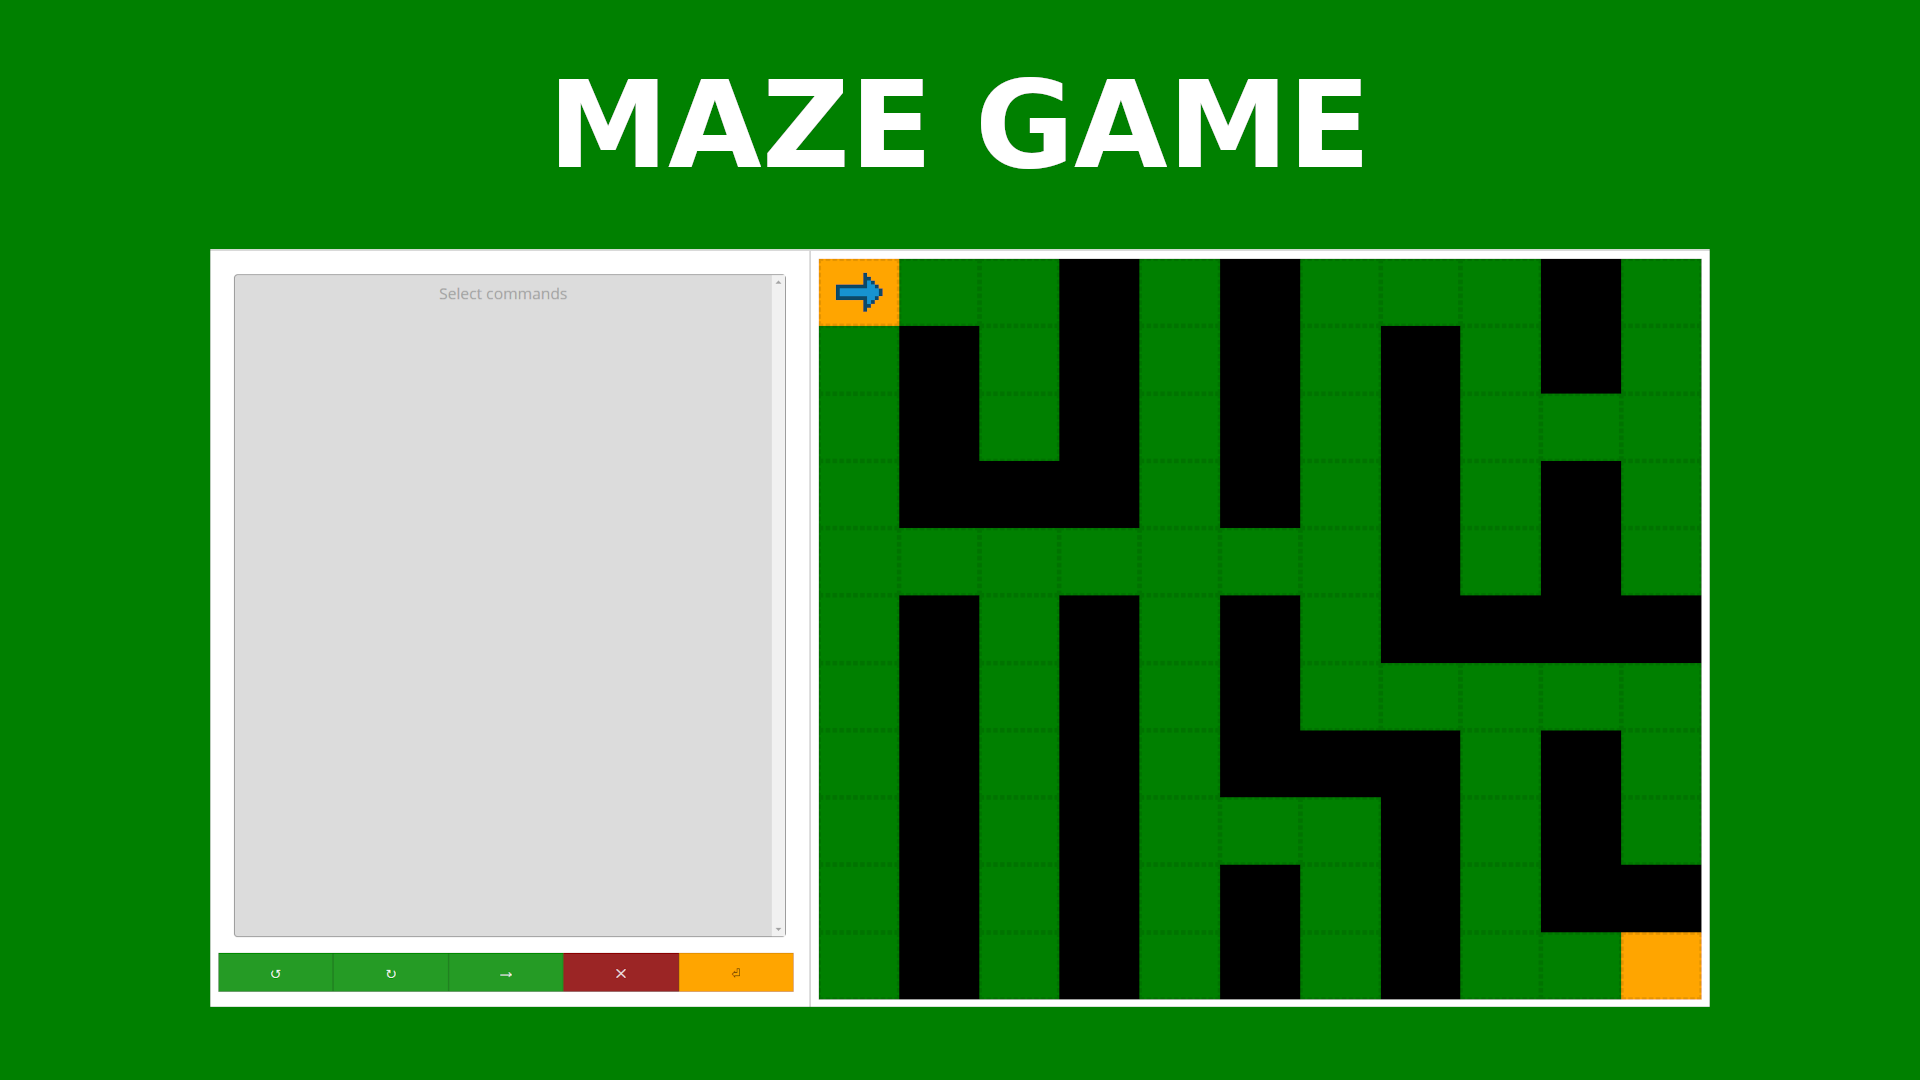 Maze game image